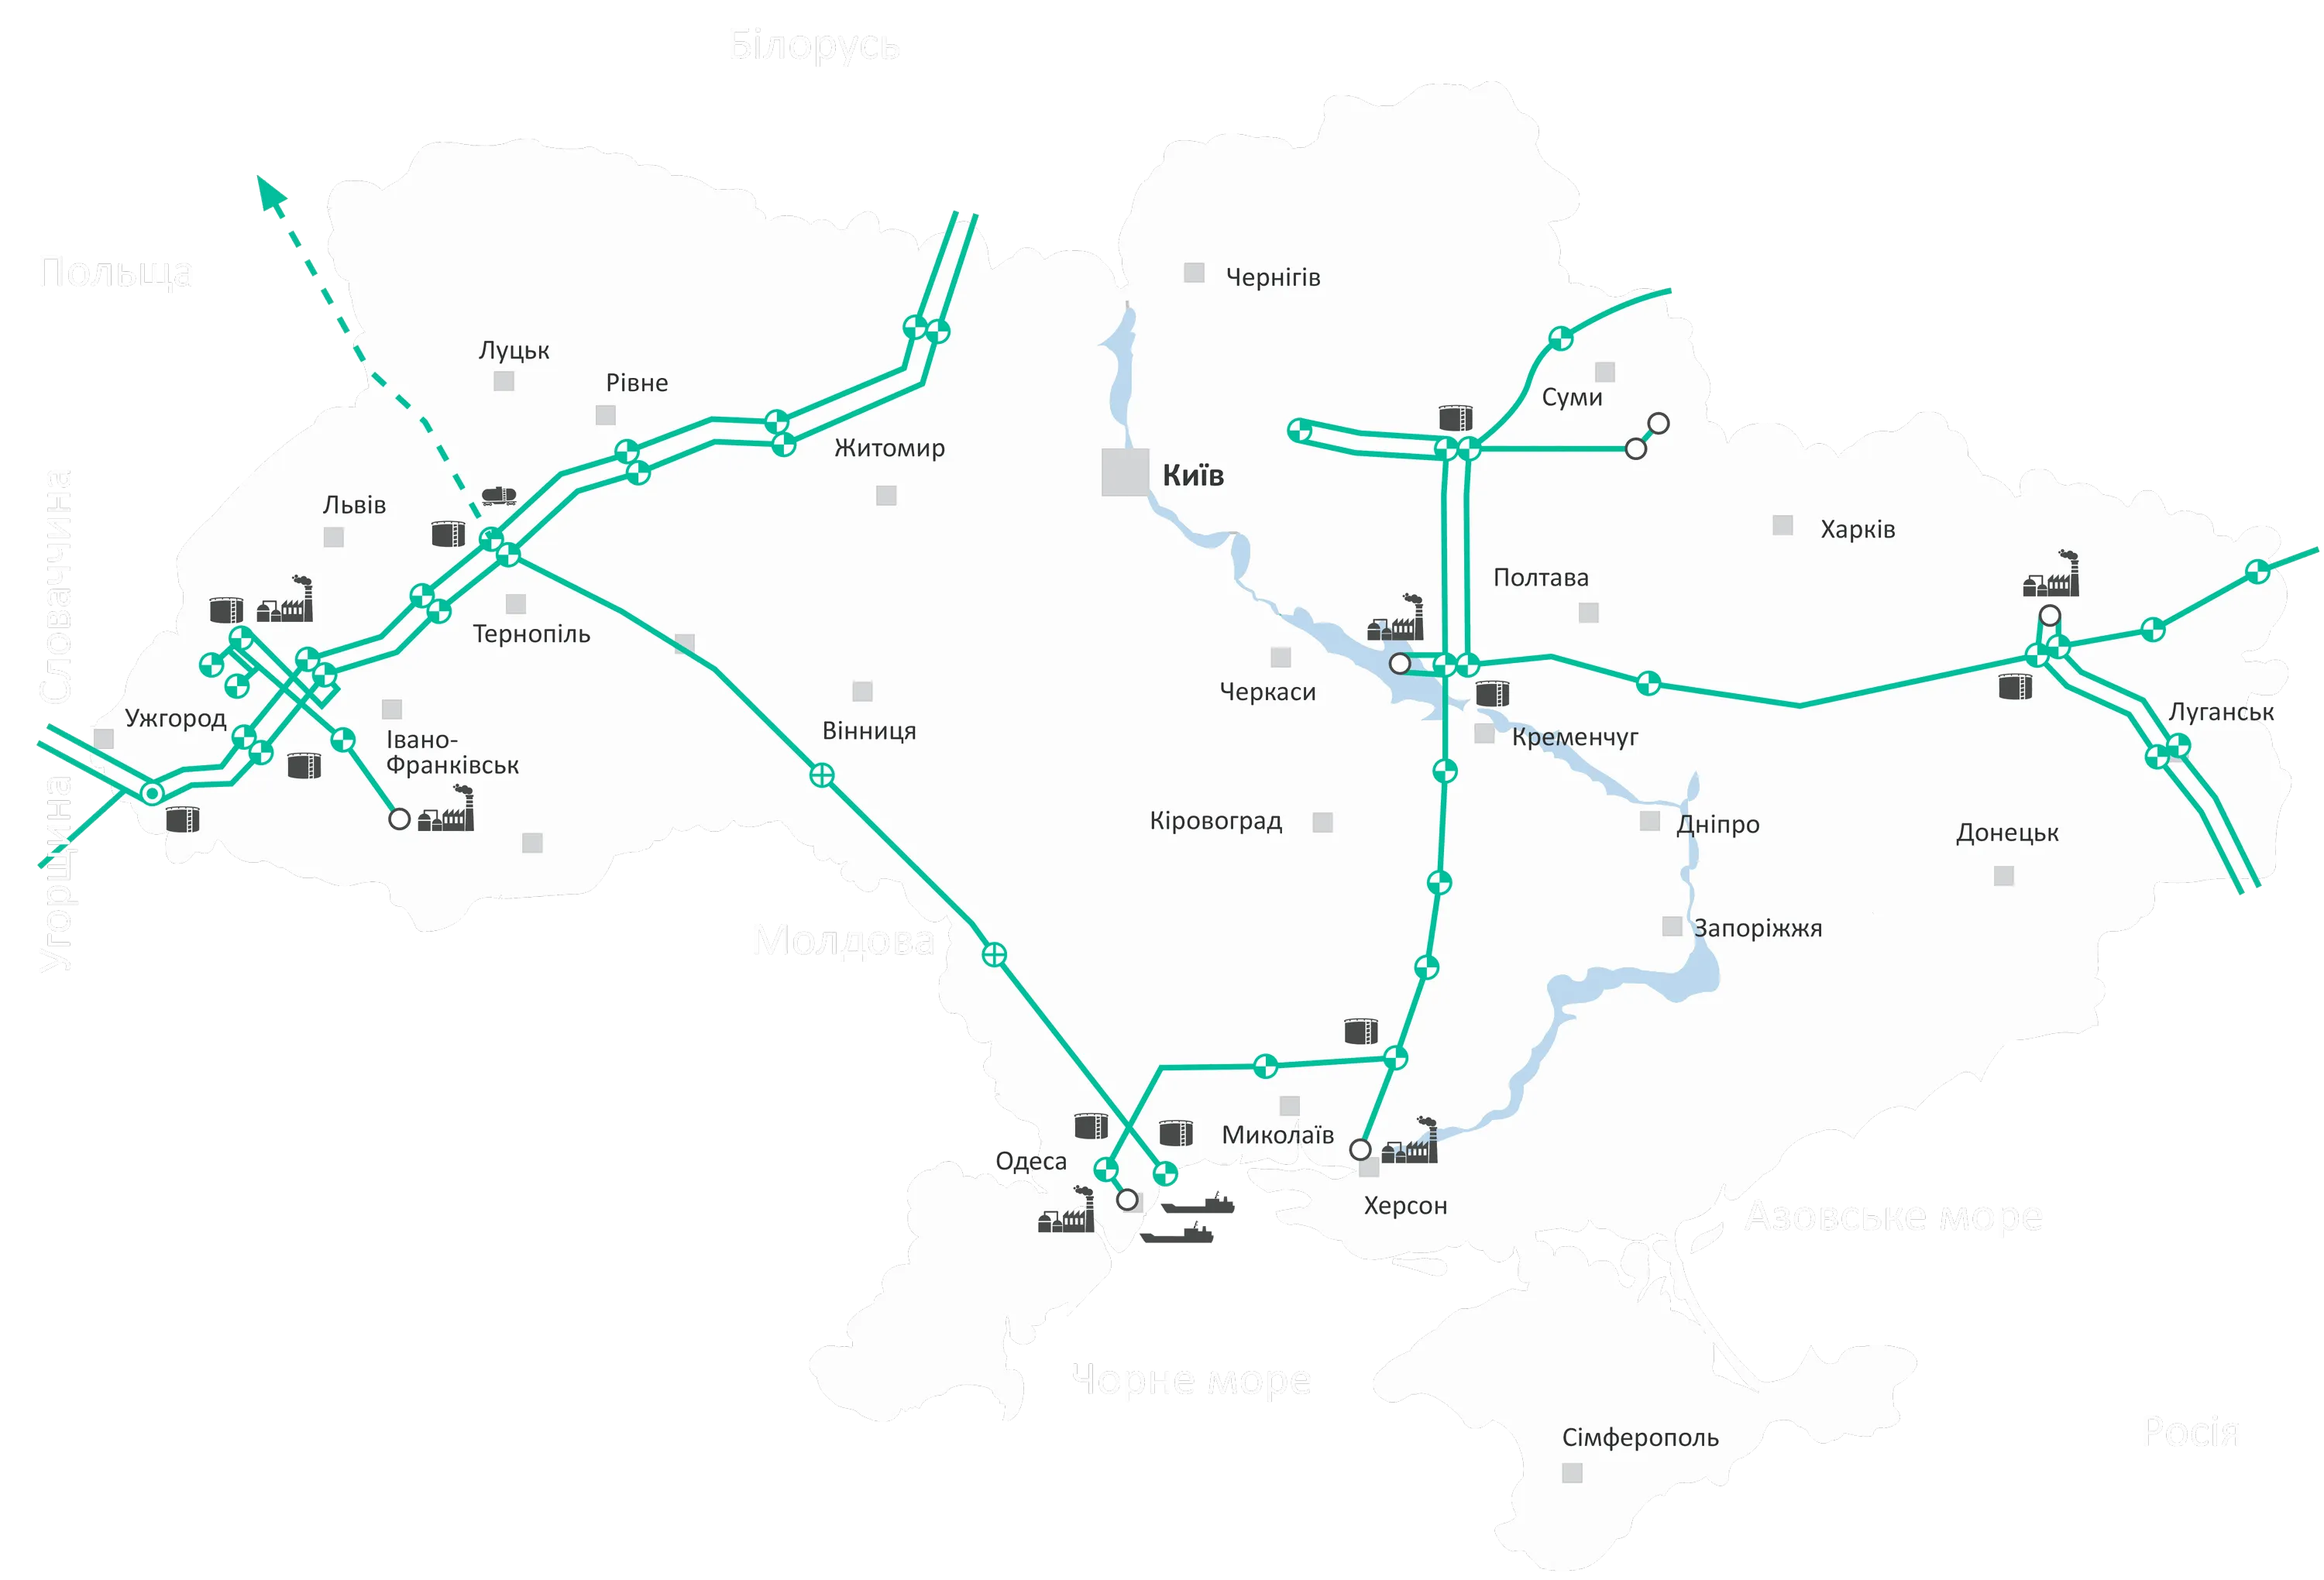 нафтотранспортна система України